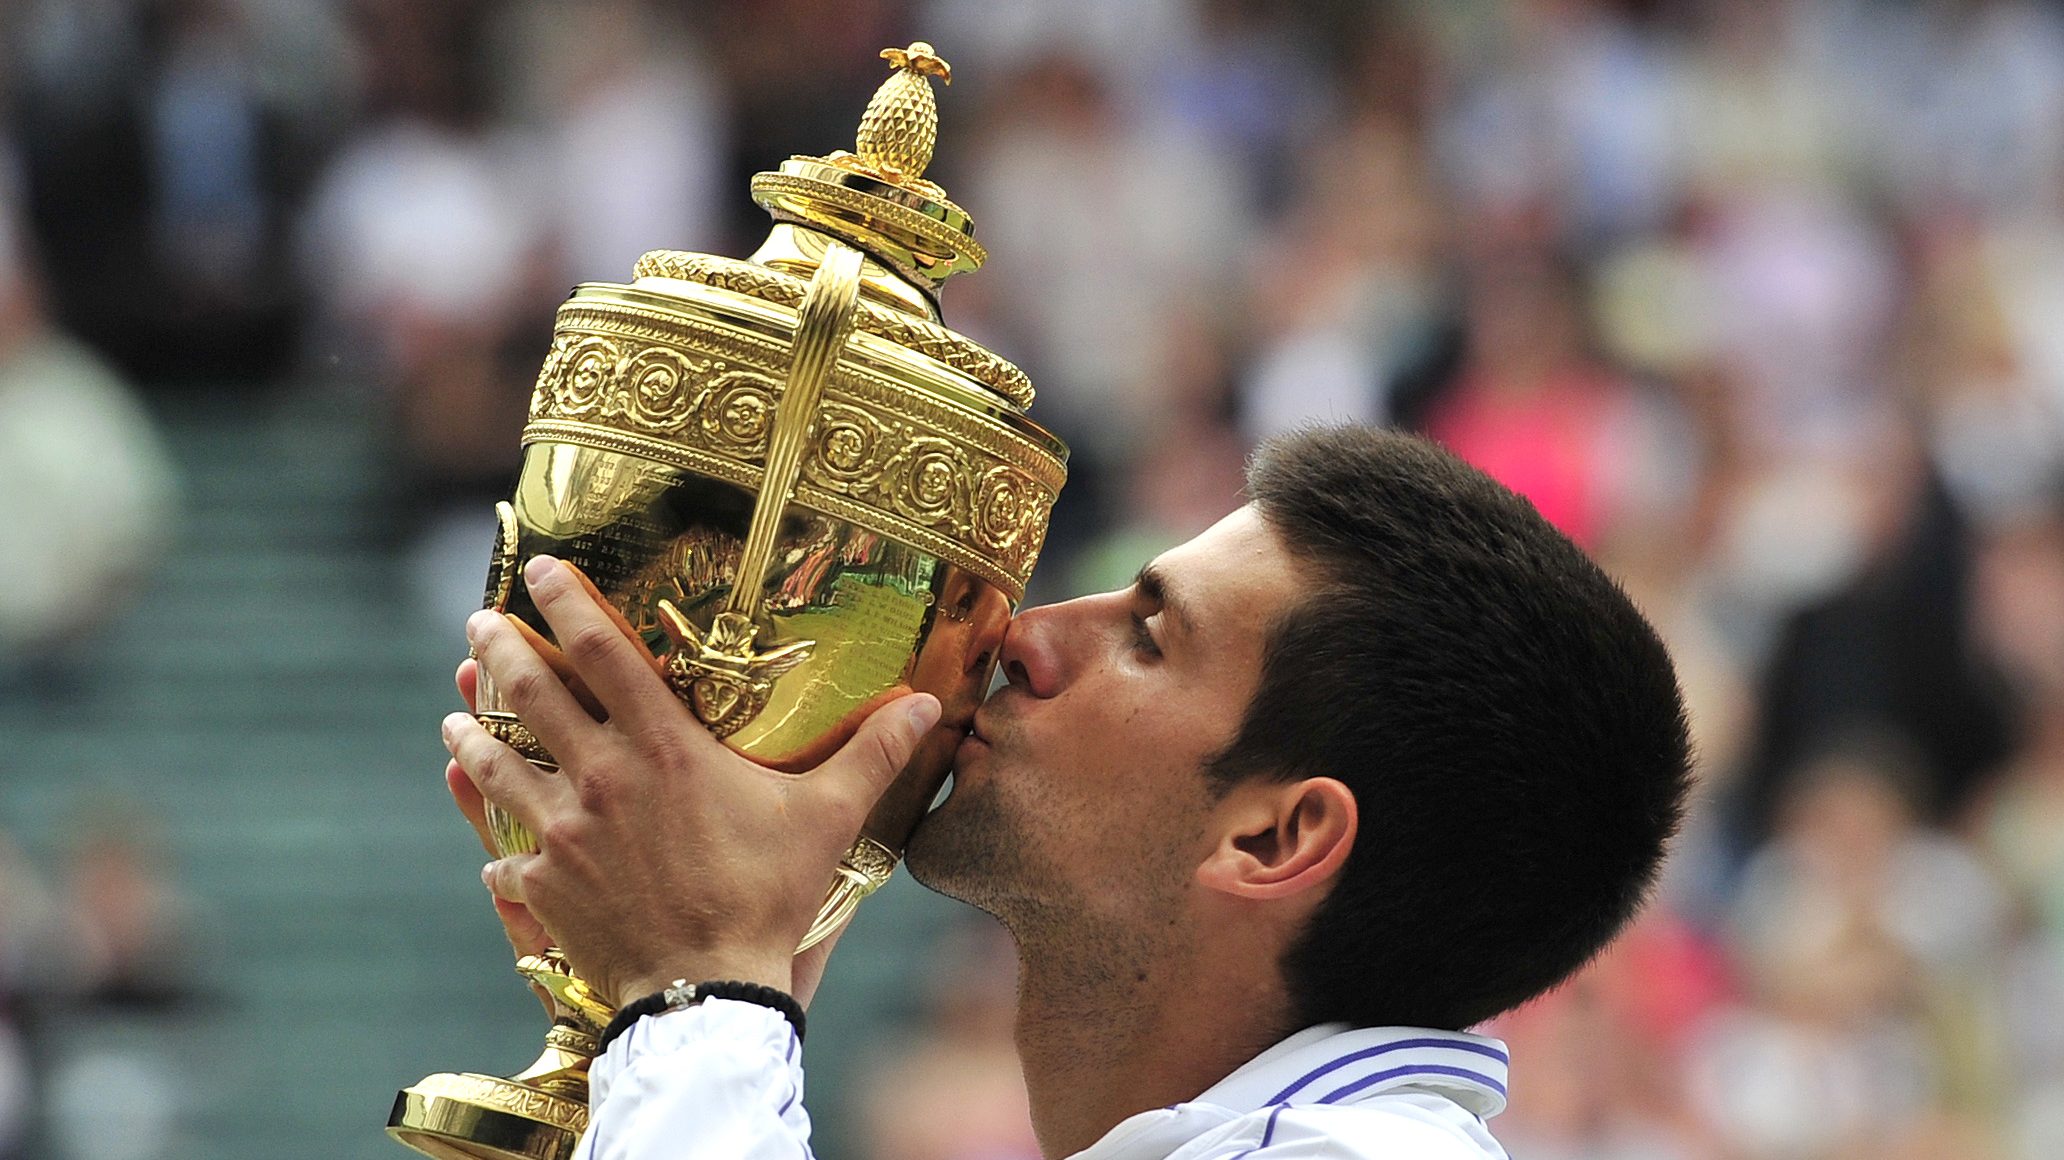 Wimbledon Purse How Much Prize Money Does Winner Make?